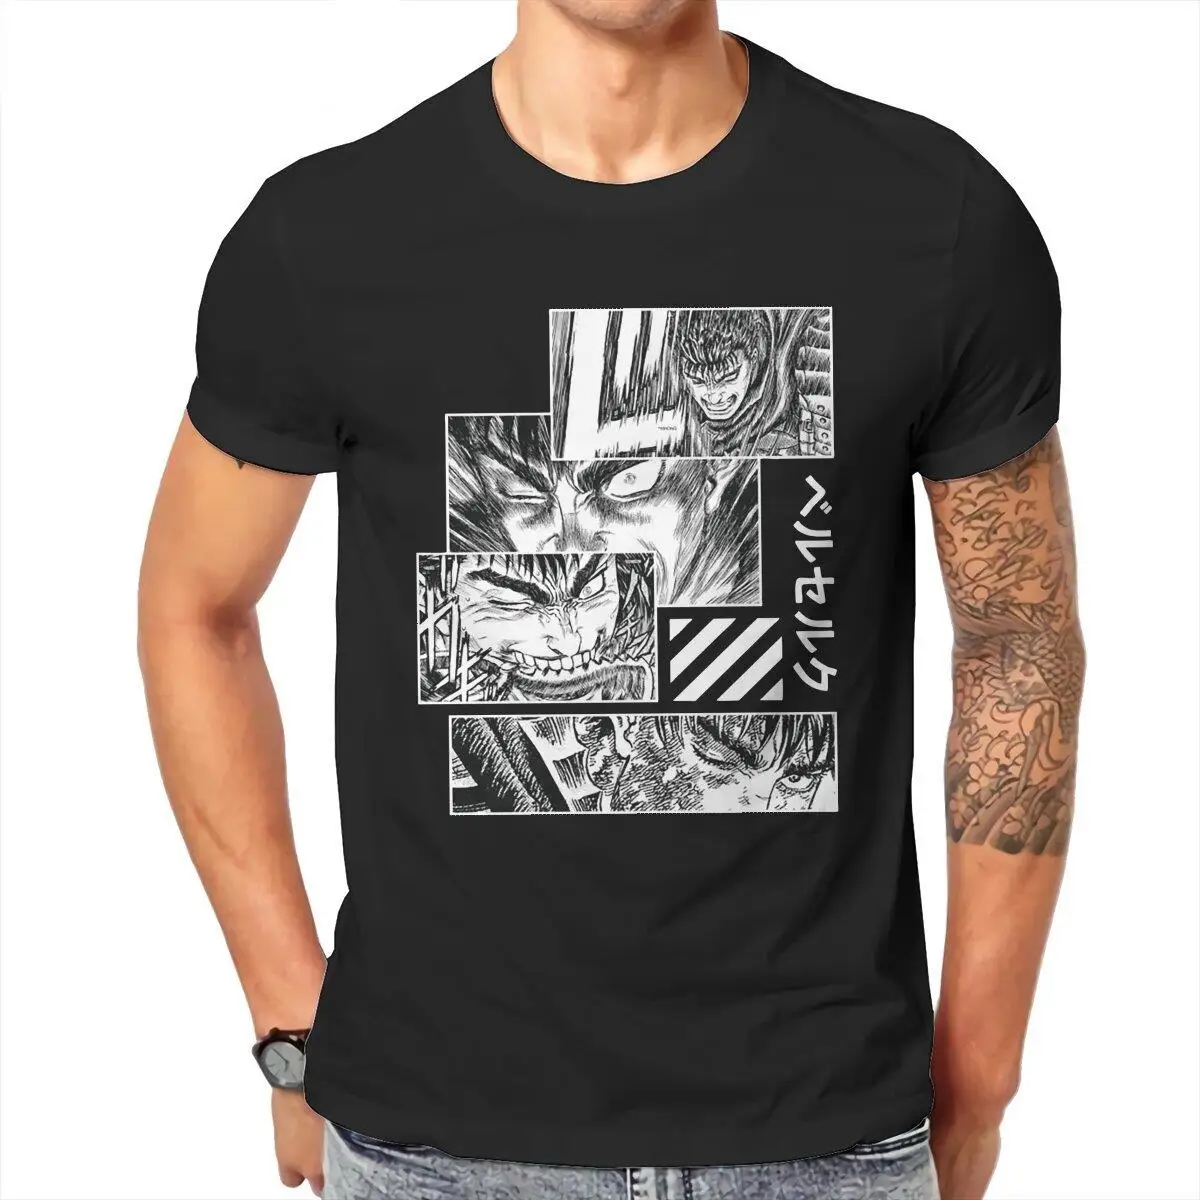 Vintage 90s Anime Manga Berserk T Shirt Men's 100% Cotton Funny T-Shirts Swordsman Beast Griffith Tee Shirt Clothes Gift